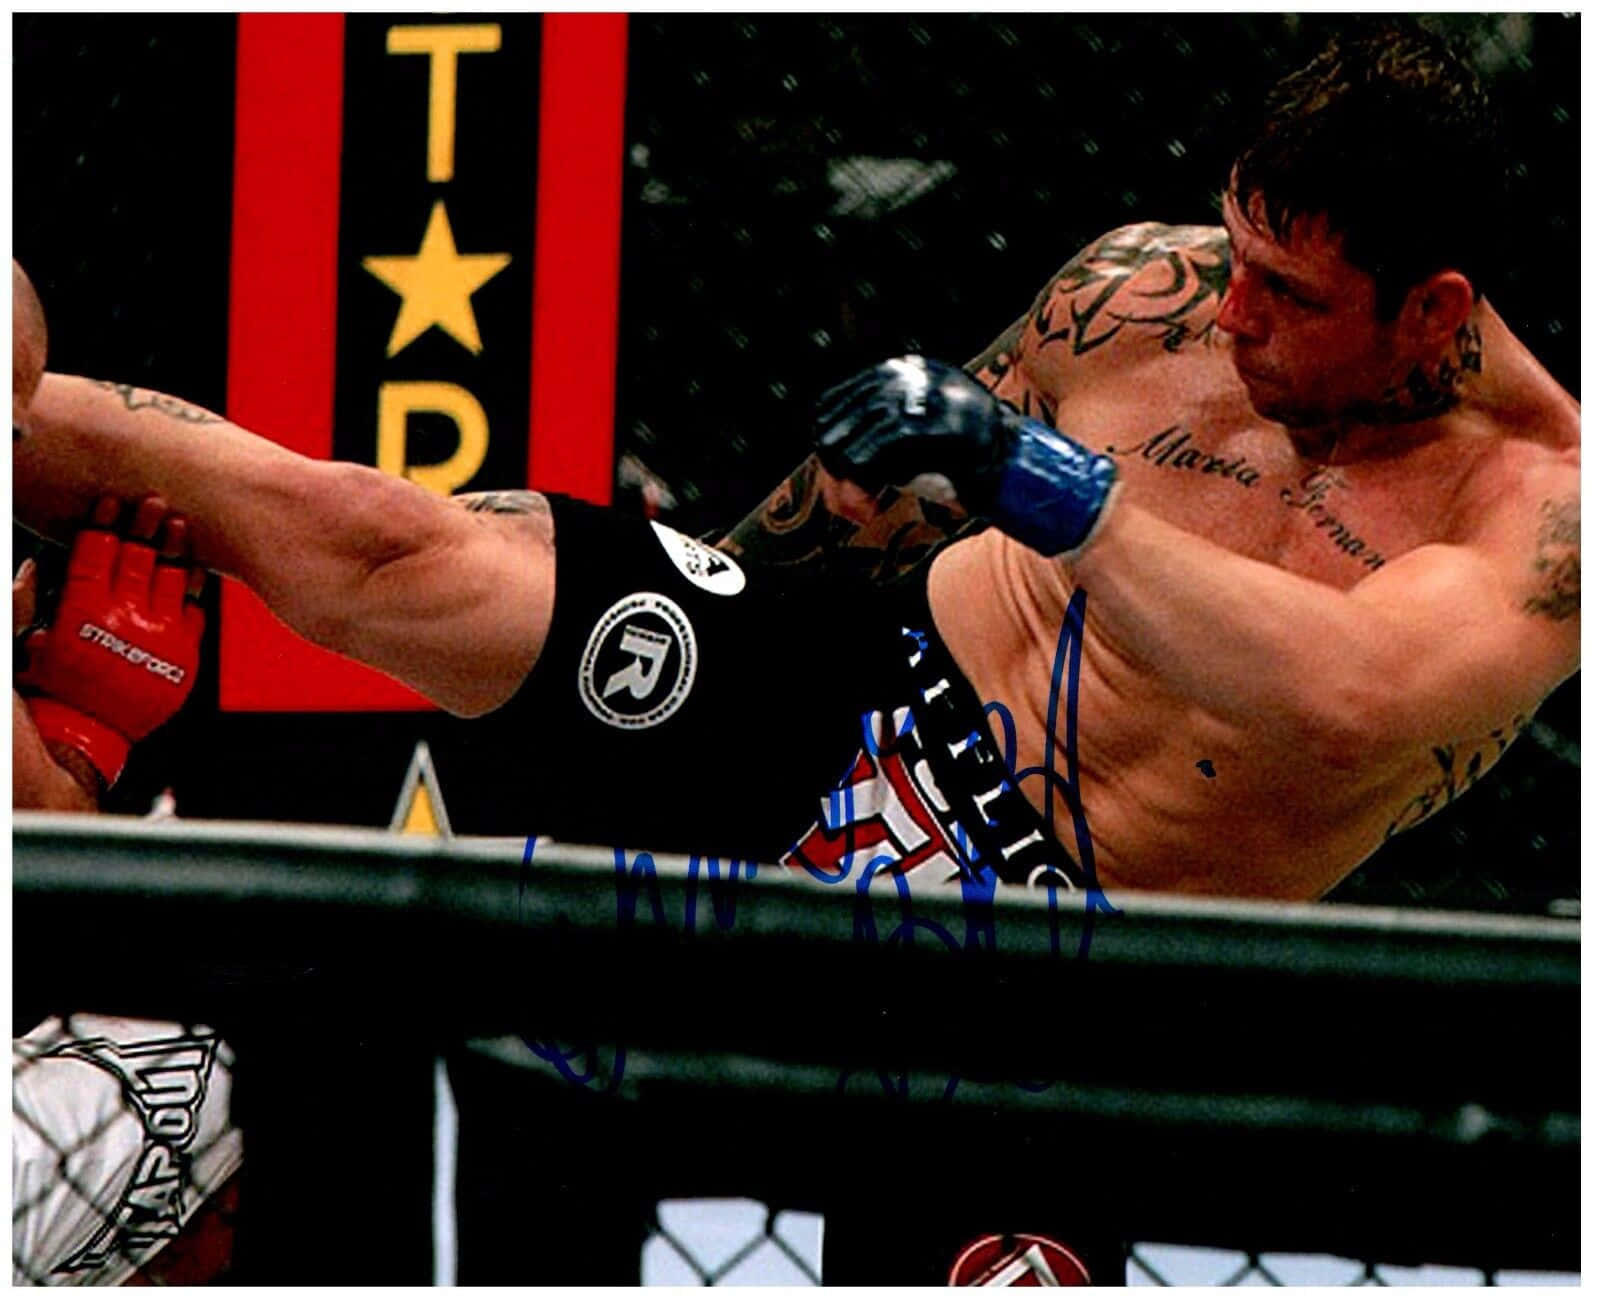 Brazilian mixed martial artist, Renato Sobral, in a 2010 Strikeforce Match. Wallpaper